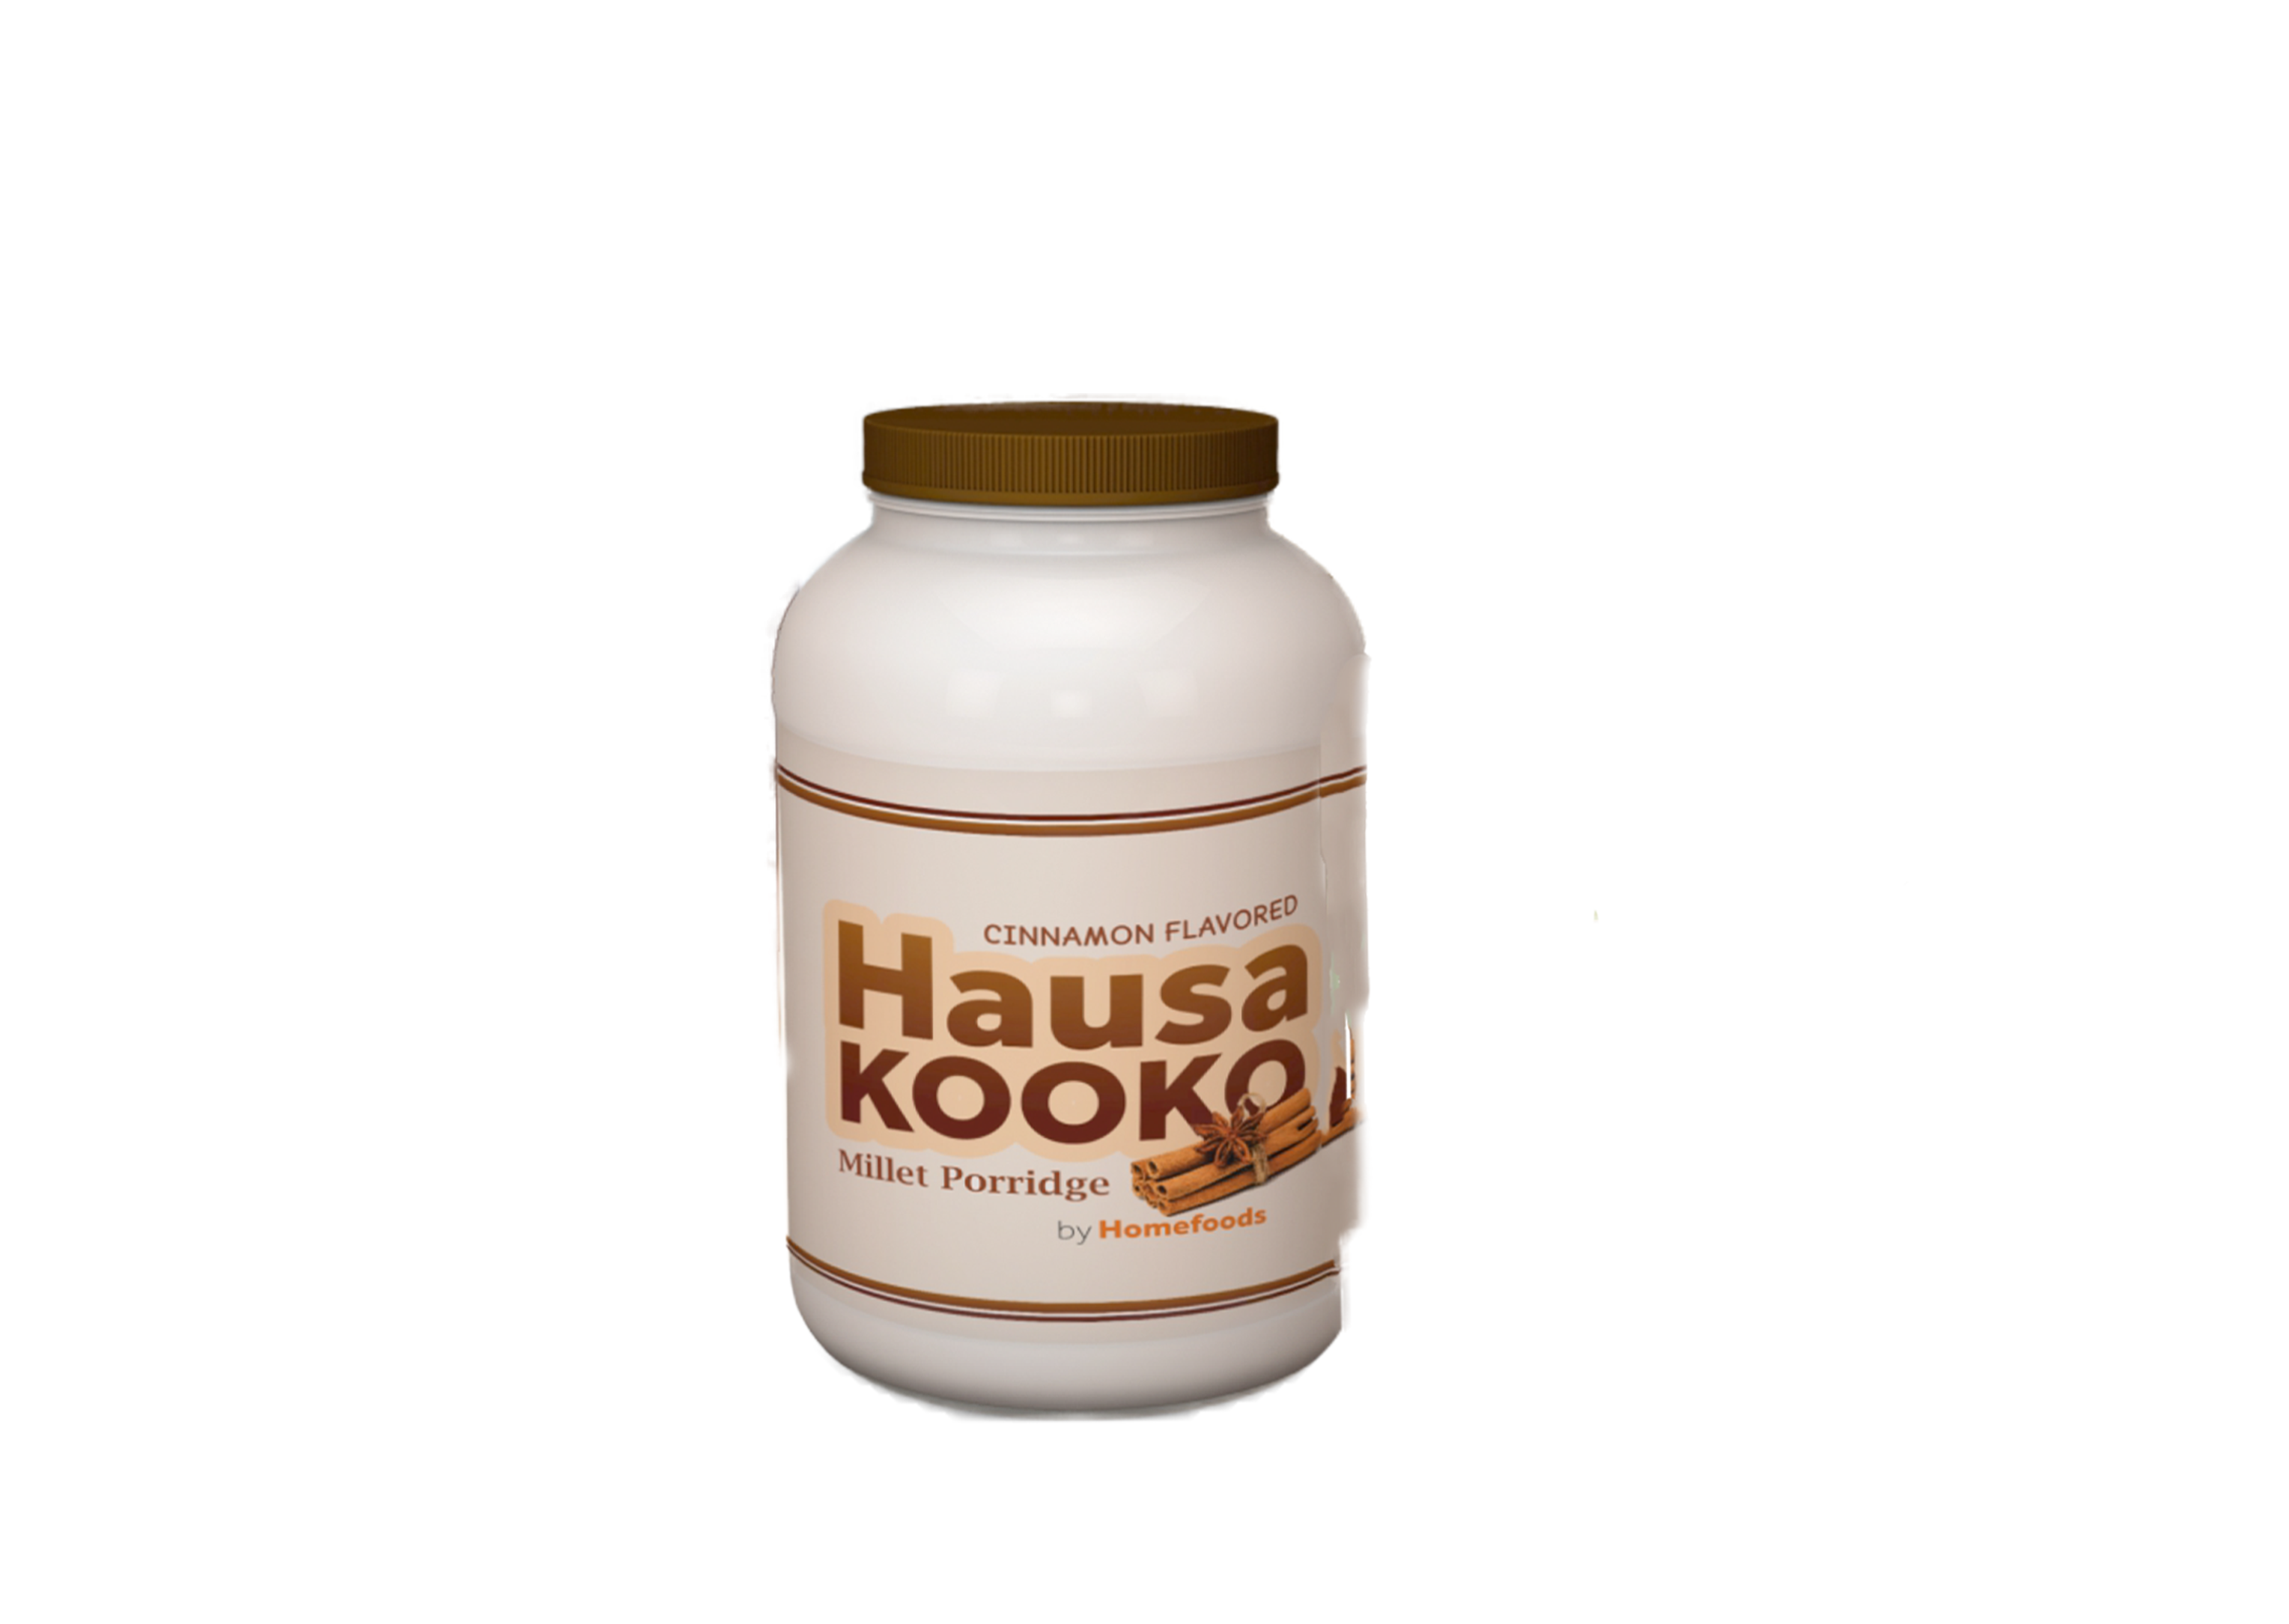 Hausa Kooko Cinnamon Flavored